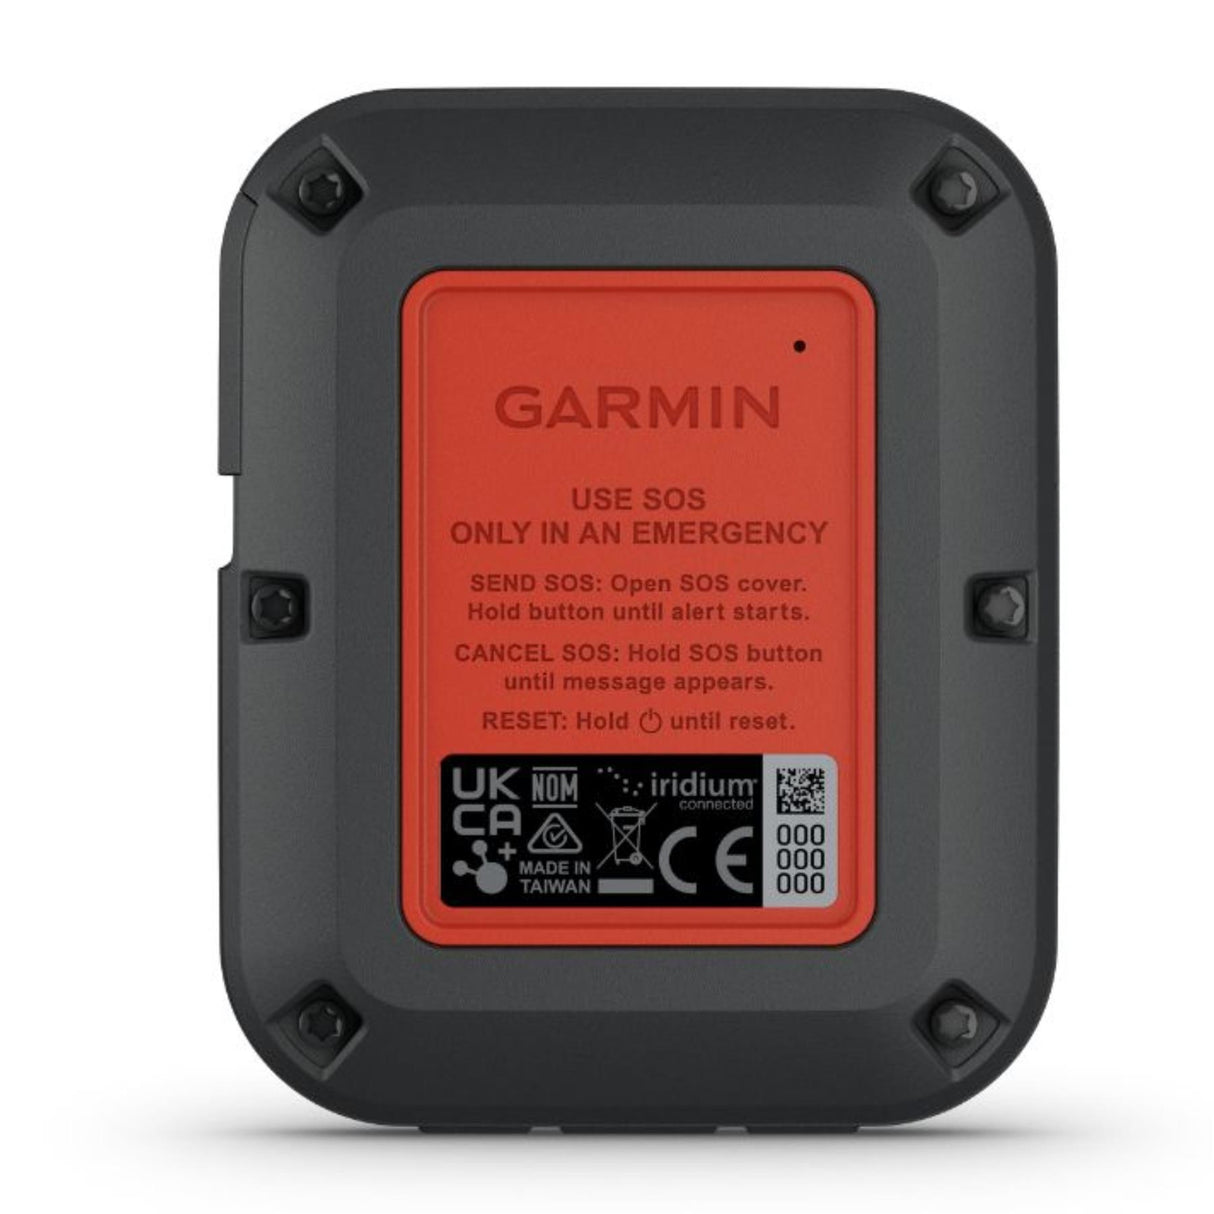 Garmin inReach Messenger - Satellite Communicator, GPS, SOS, IPX7